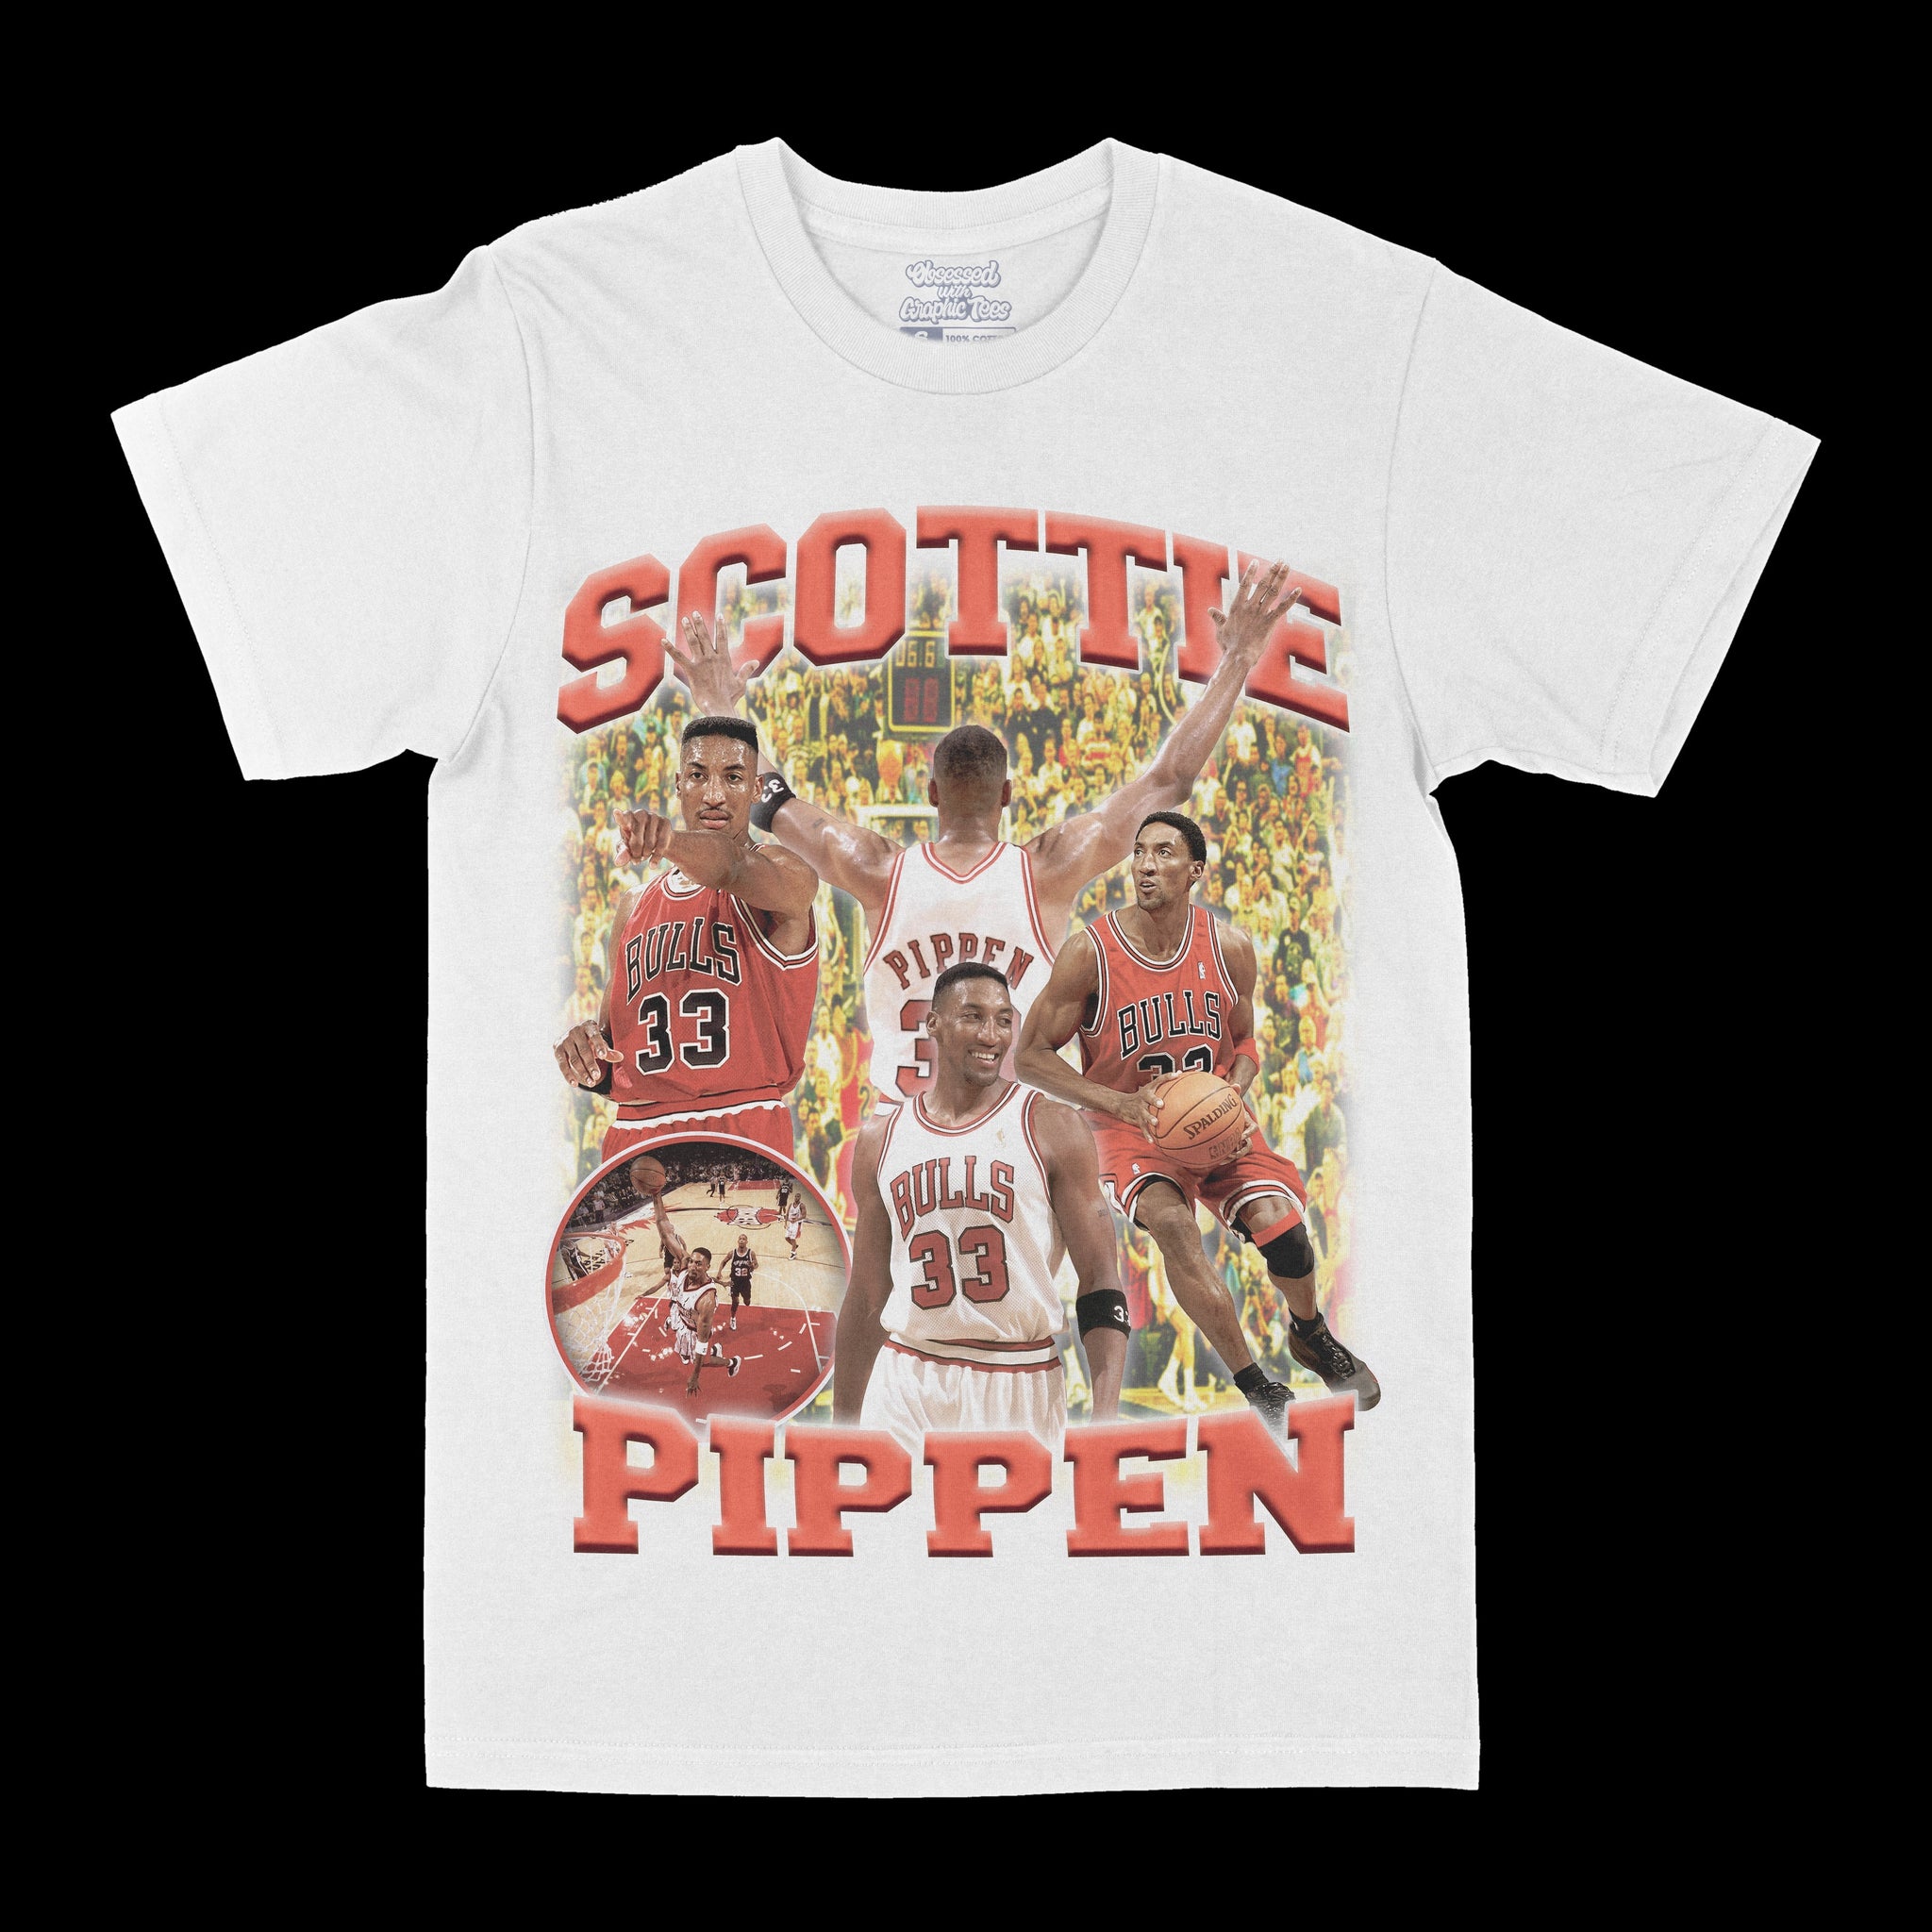 Scottie Pippen Graphic Tee